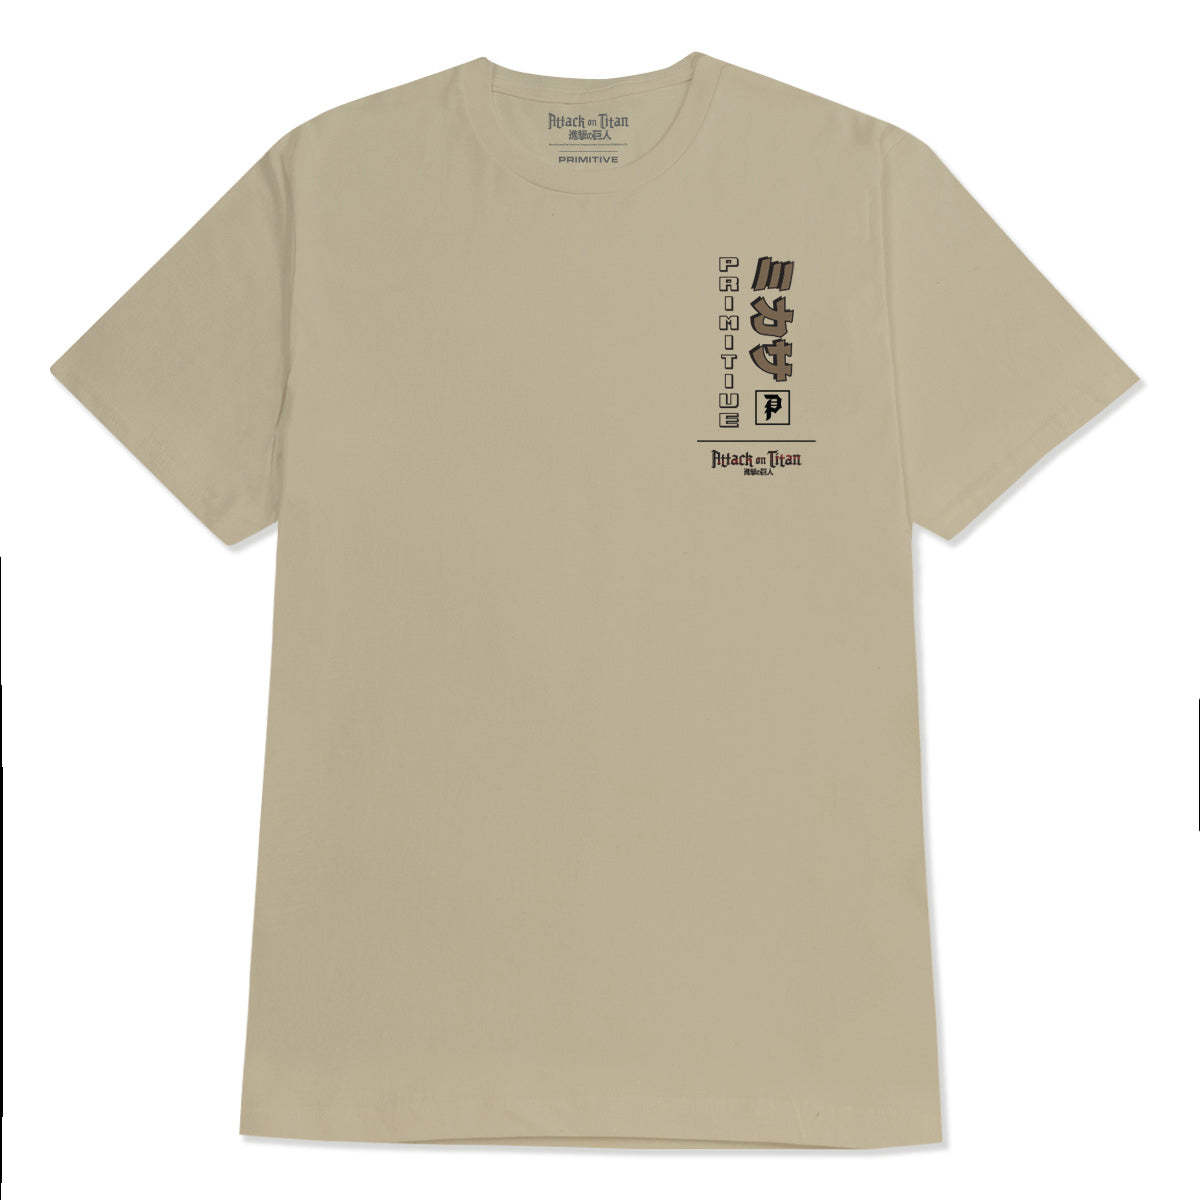 Primitive x Titans Mikasa T-Shirt - Sand image 2